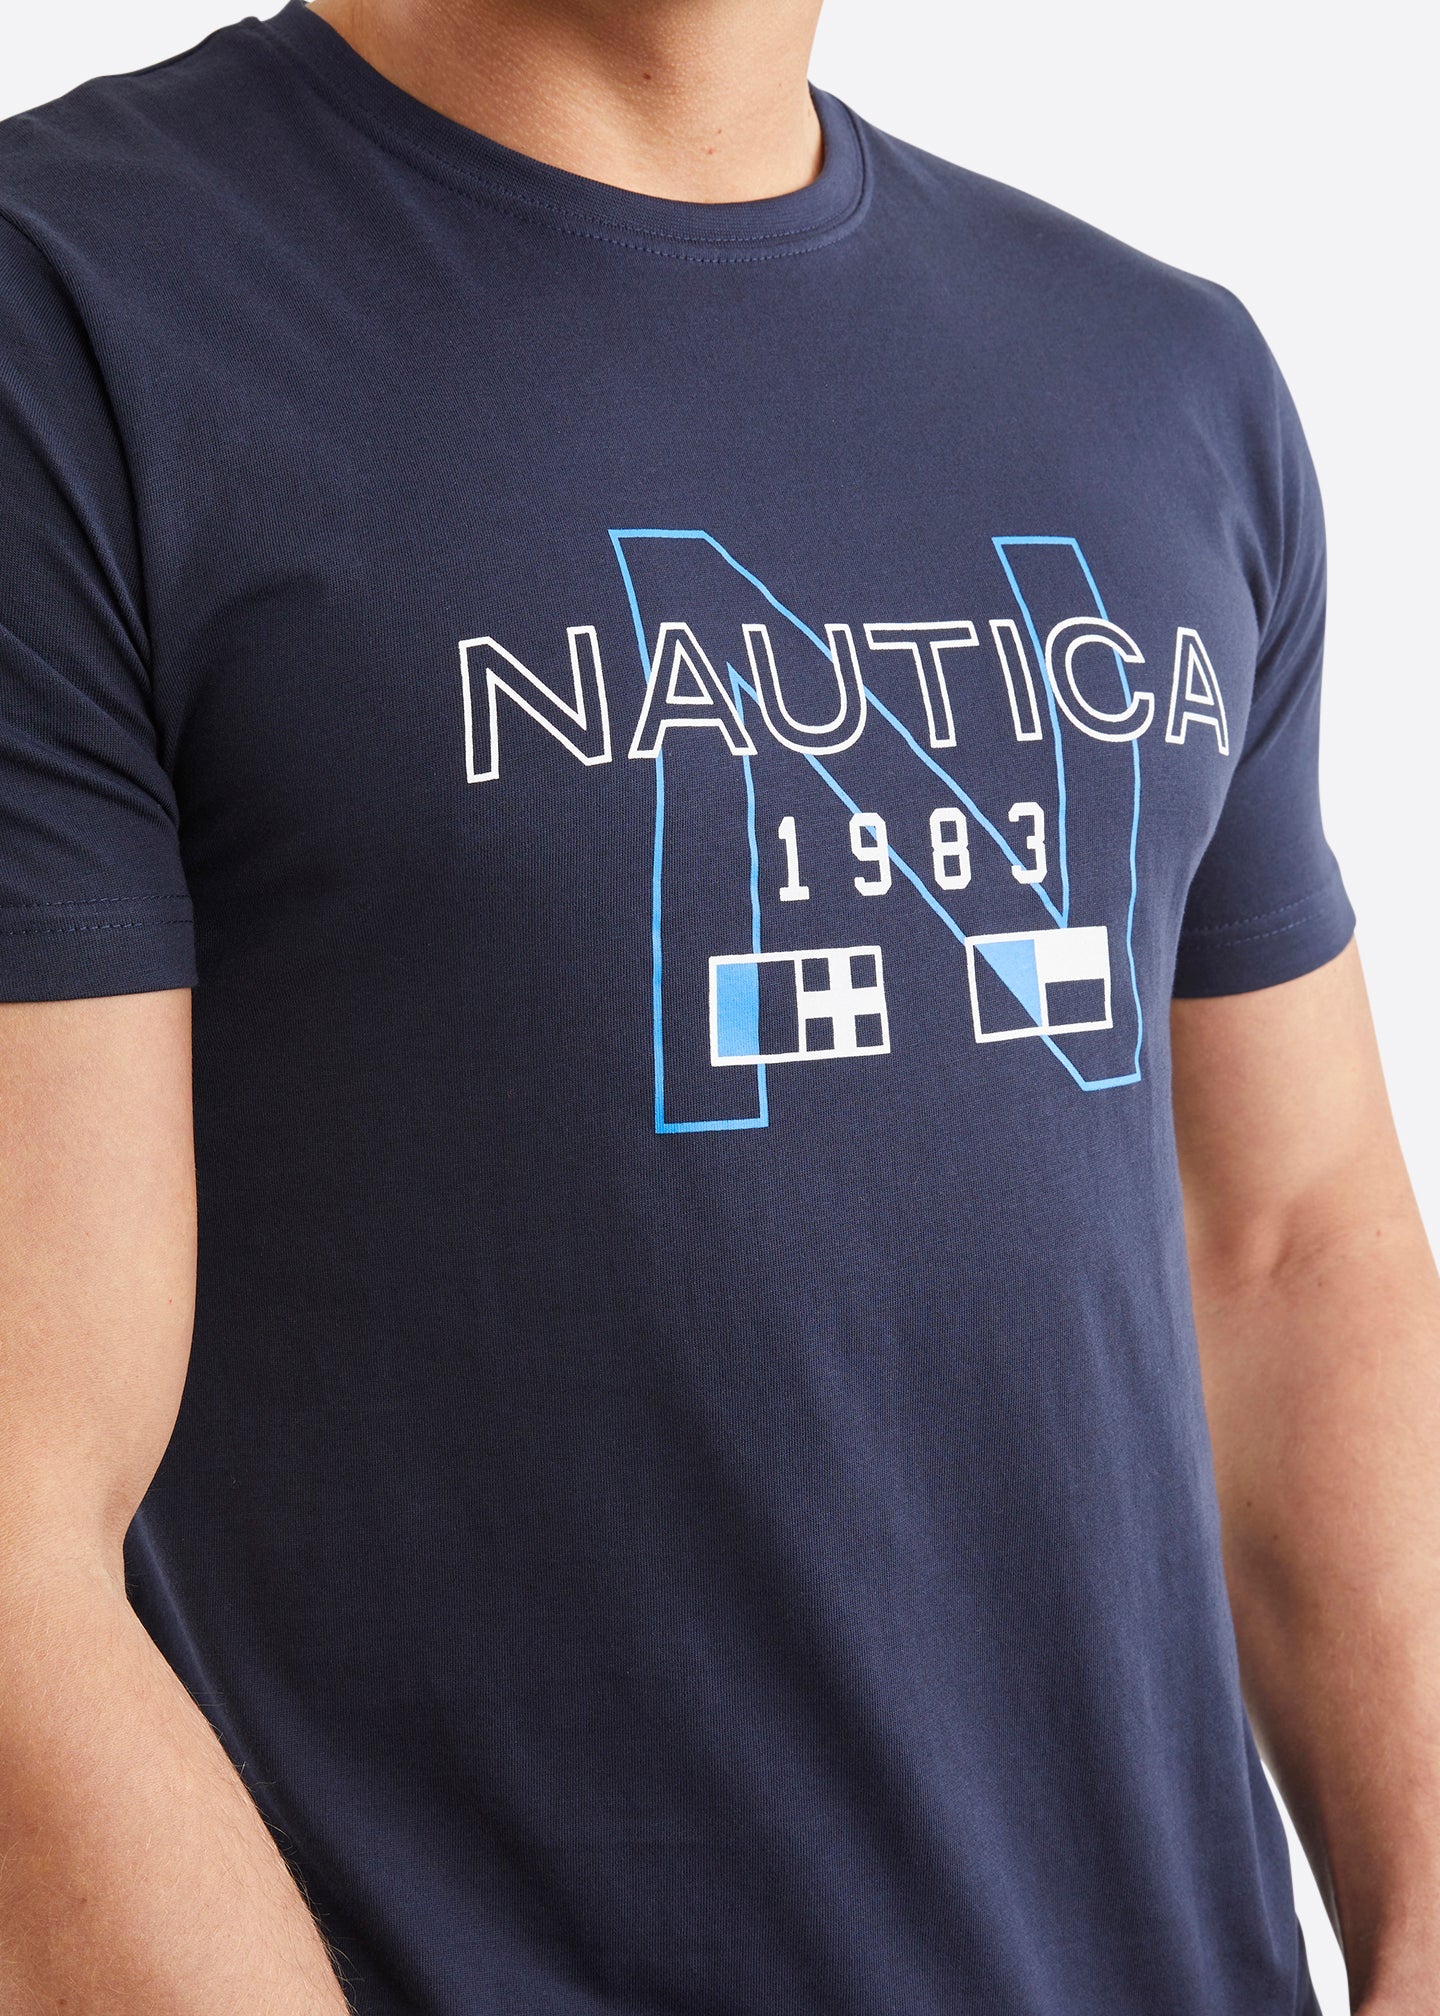 Nautica Kaden T-Shirt